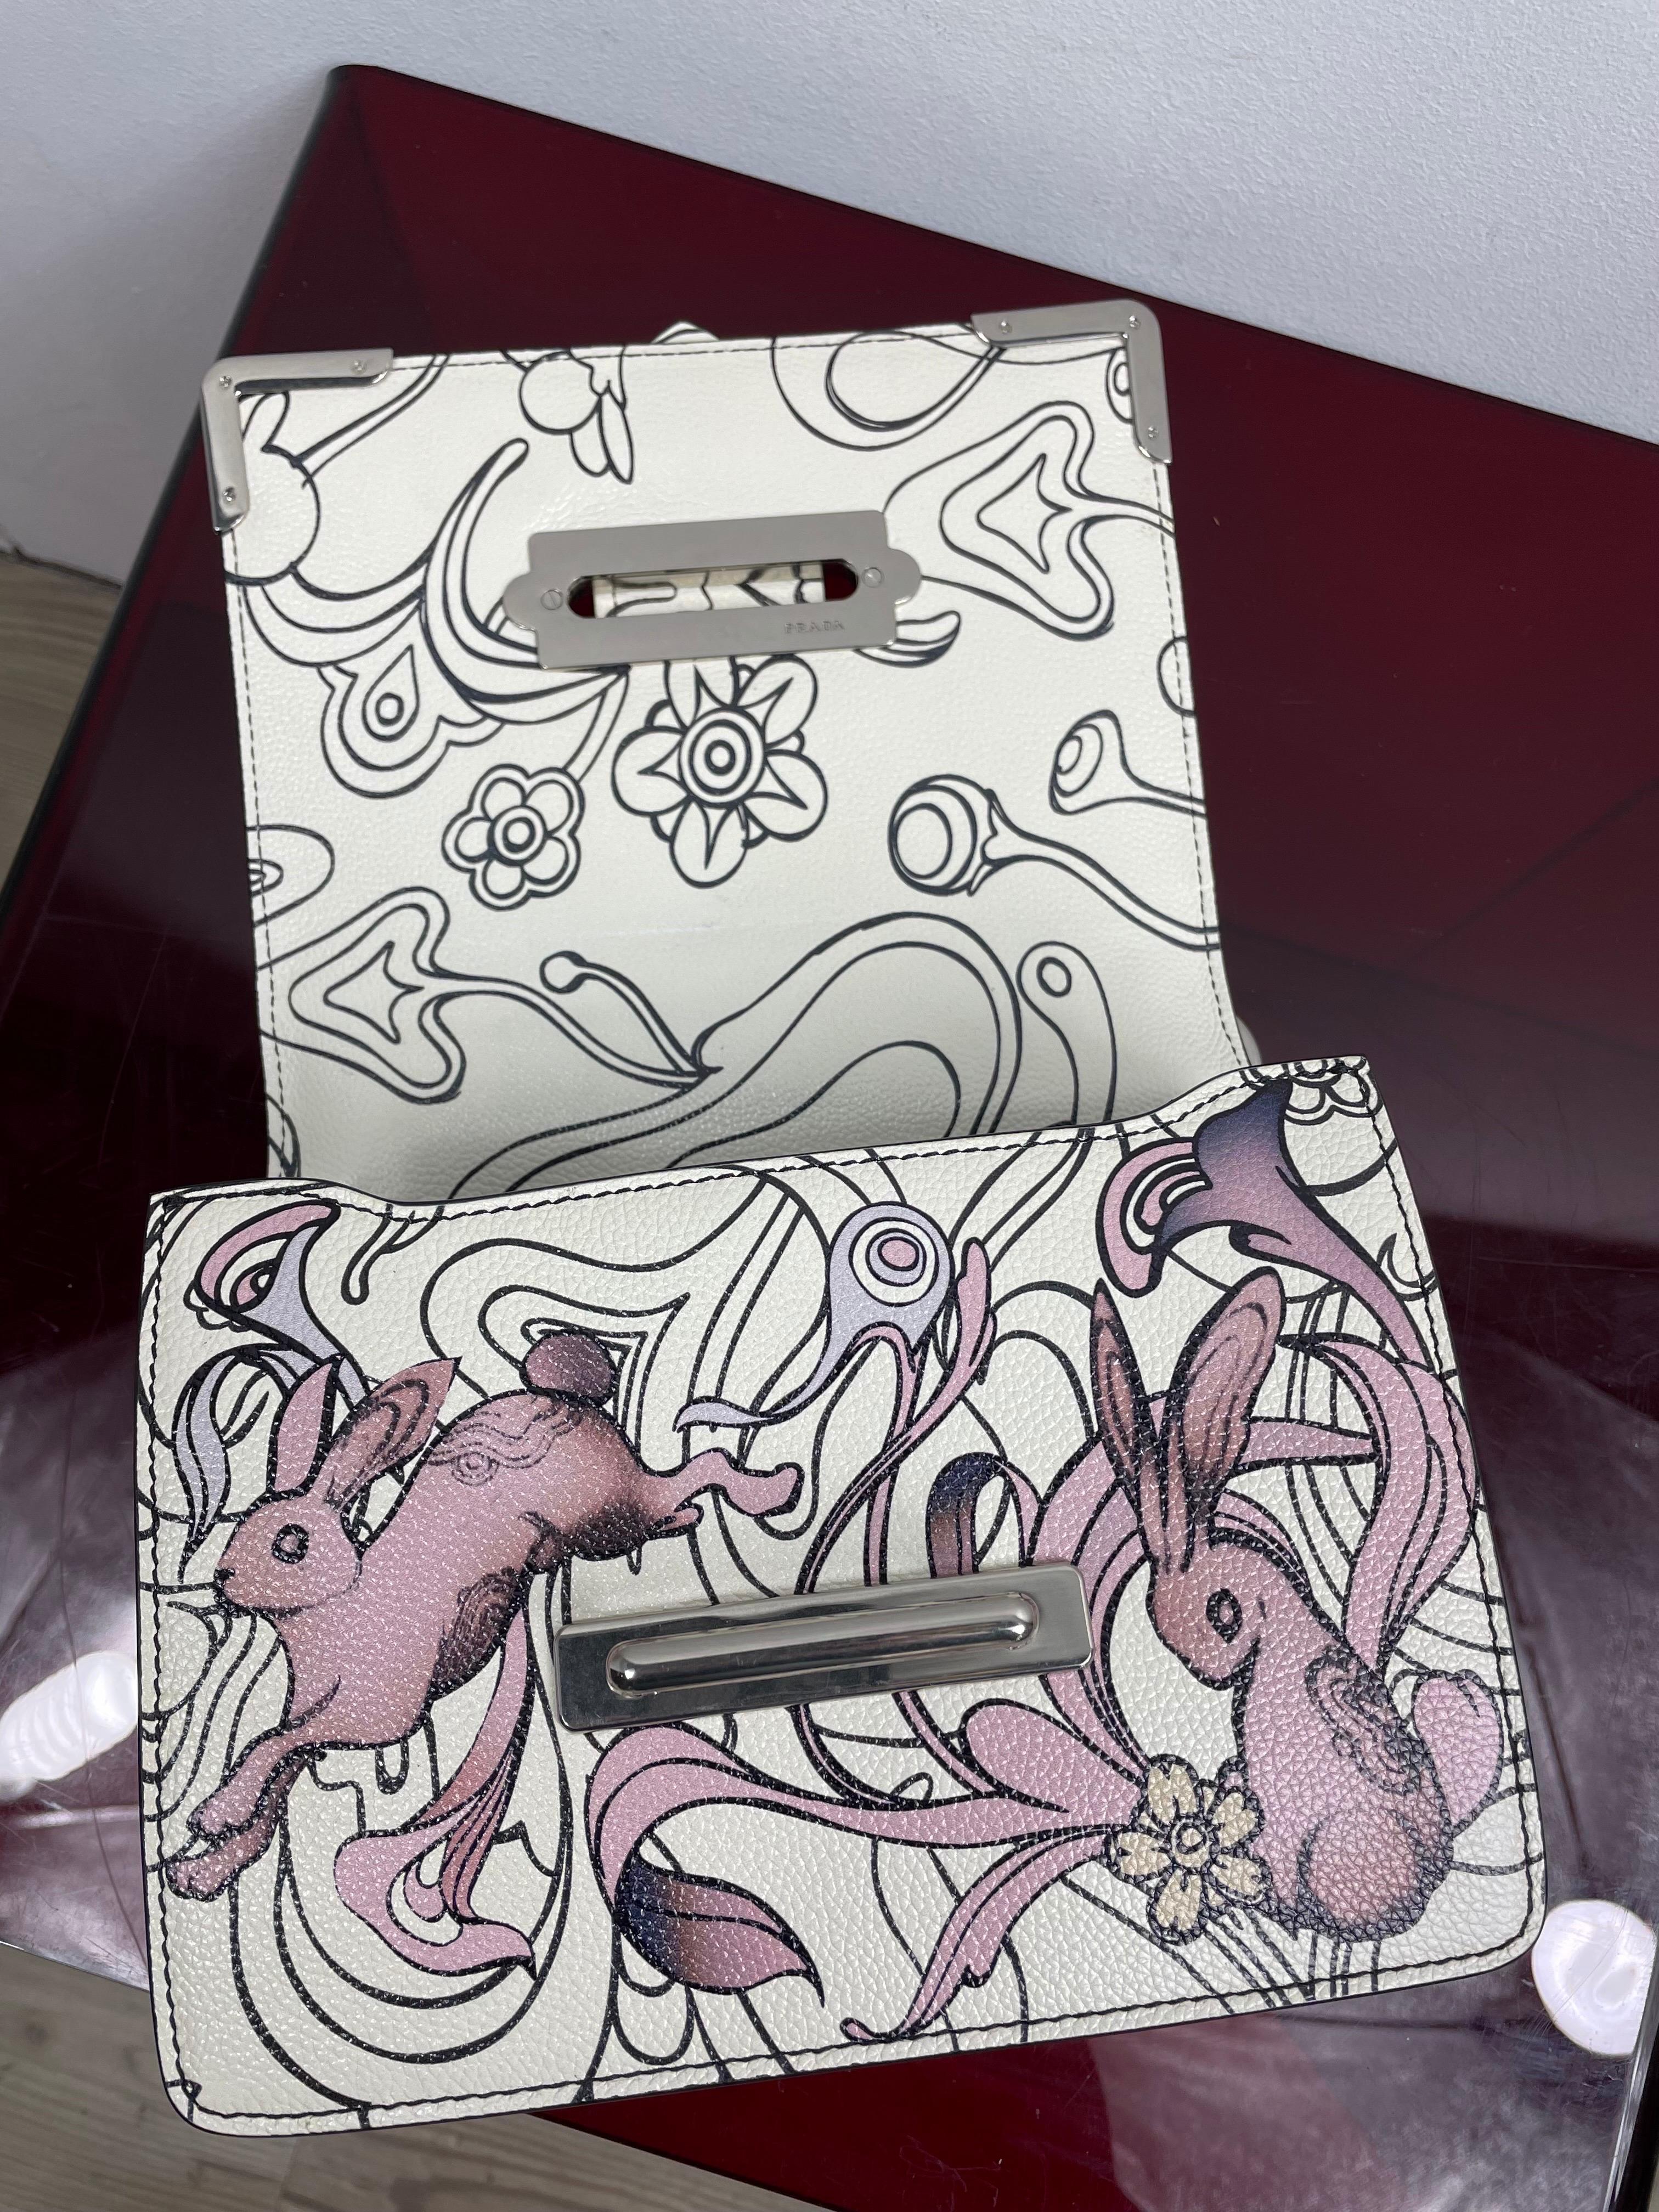 Prada Resort 2018 Glace Rabbit cahier bag 1